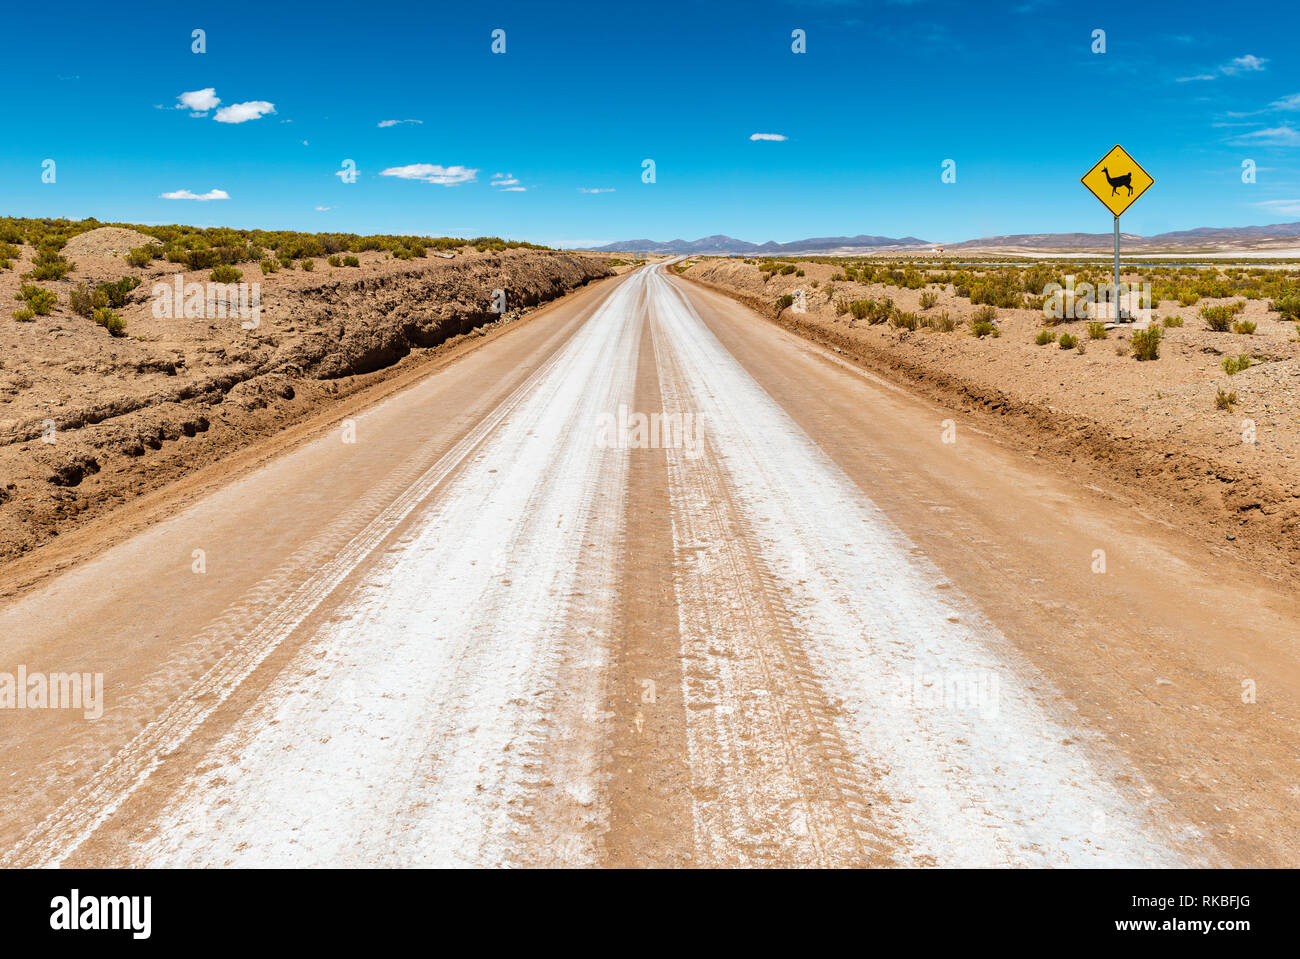 Landscape photograph of a highway, road in the Uyuni Salt Flat region (Salar de Uyuni) with a danger sign: llama on the road! Bolivia, South America. Stock Photo